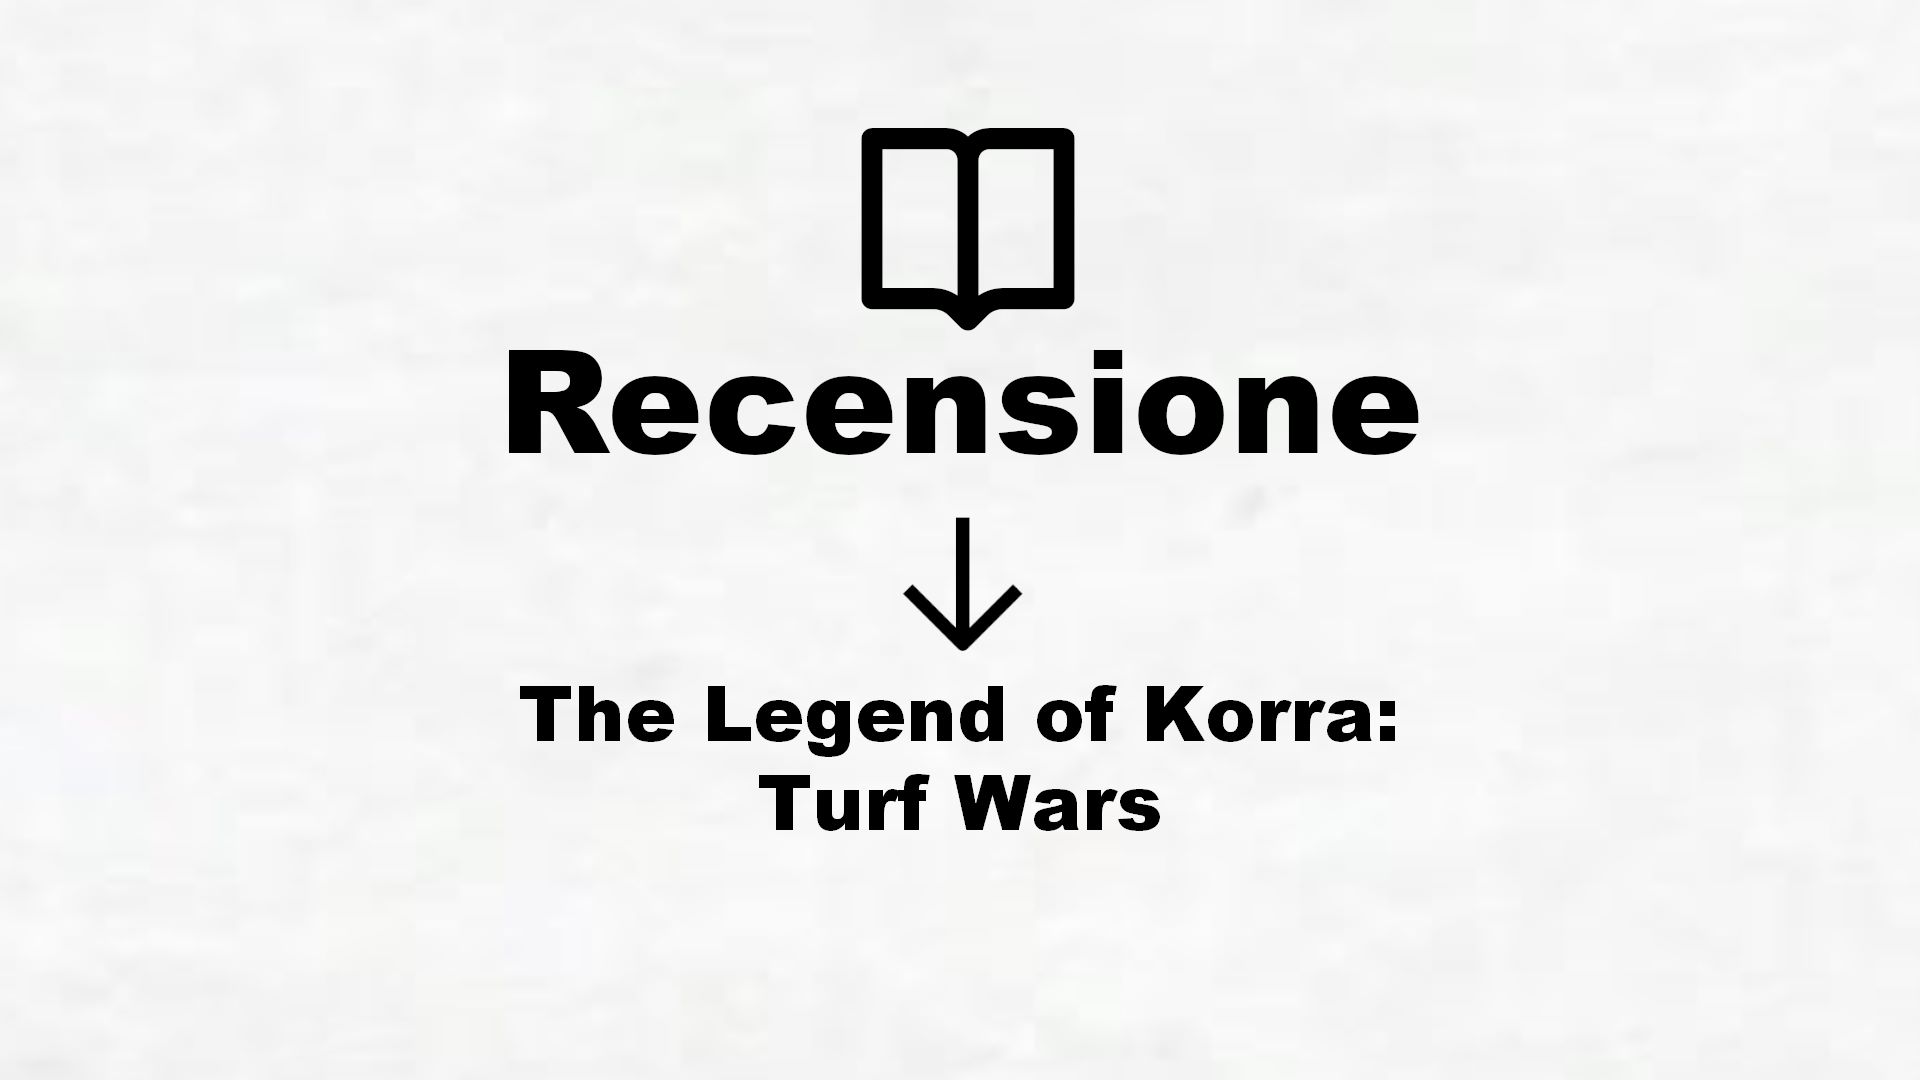 The Legend of Korra: Turf Wars – Recensione Libro